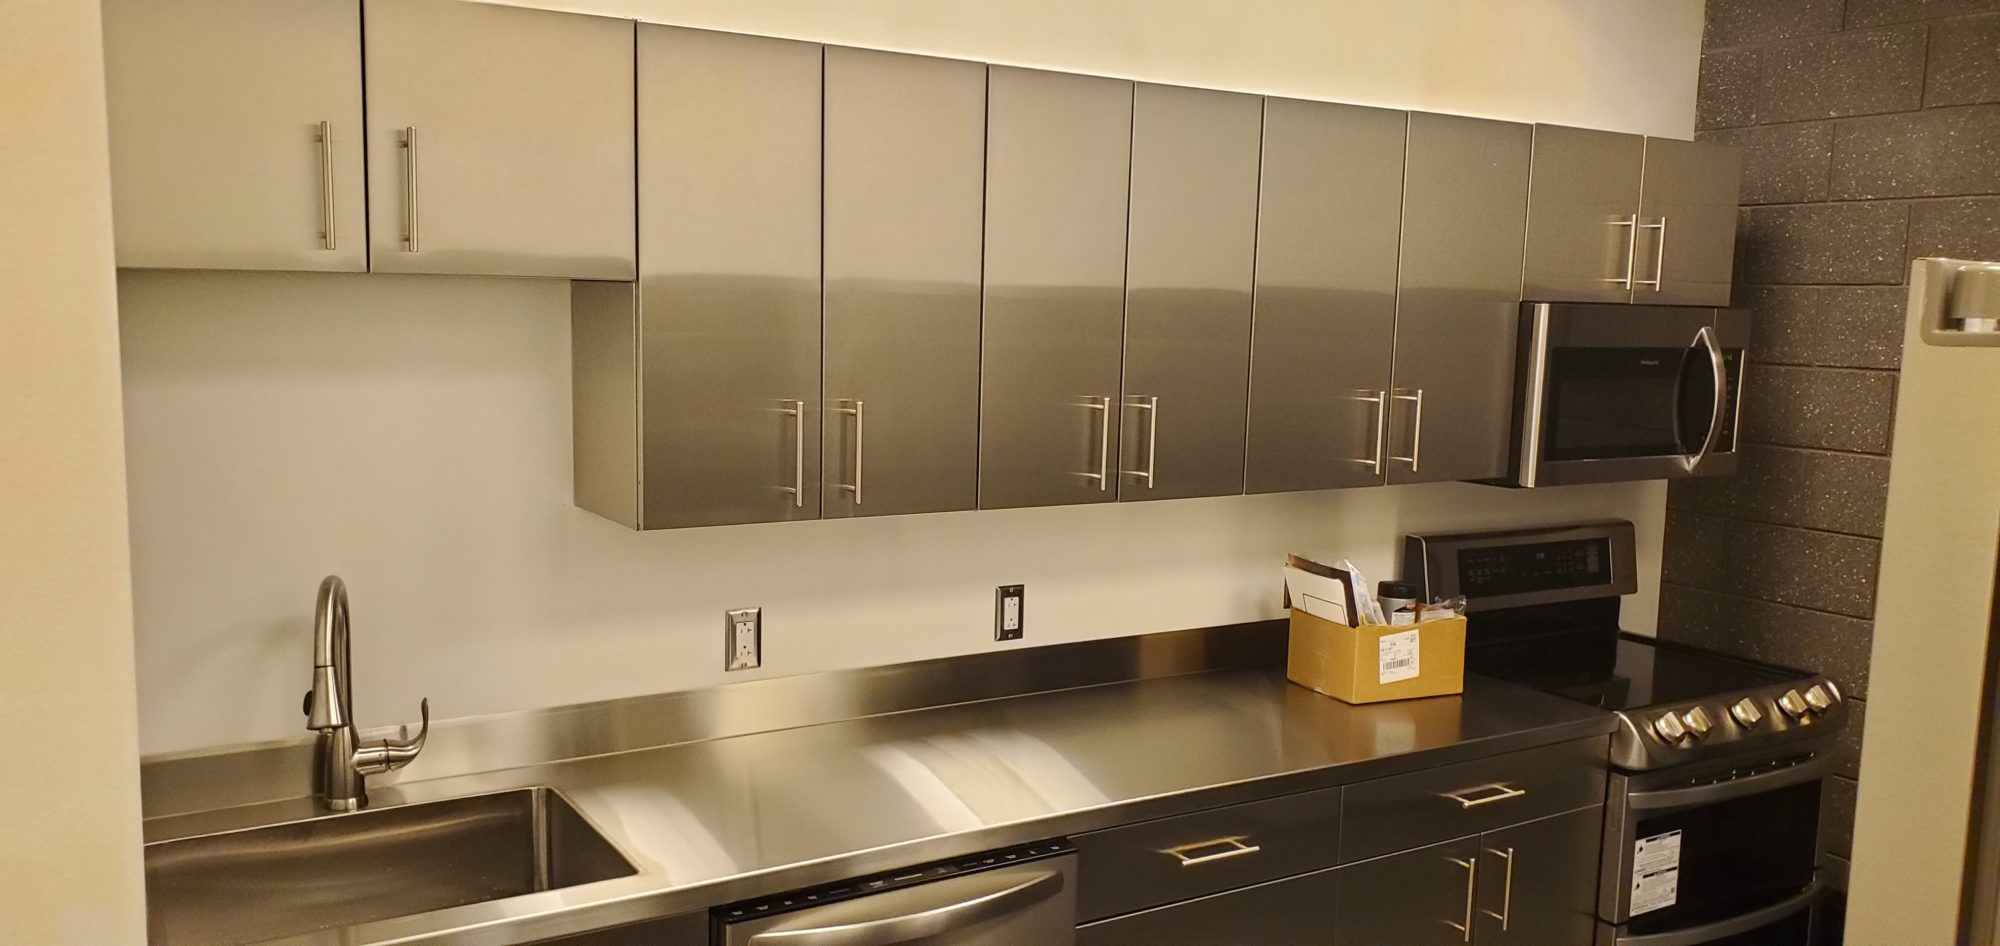 Stainless Steel Commercial Kitchen Cabinets Steelkitchen